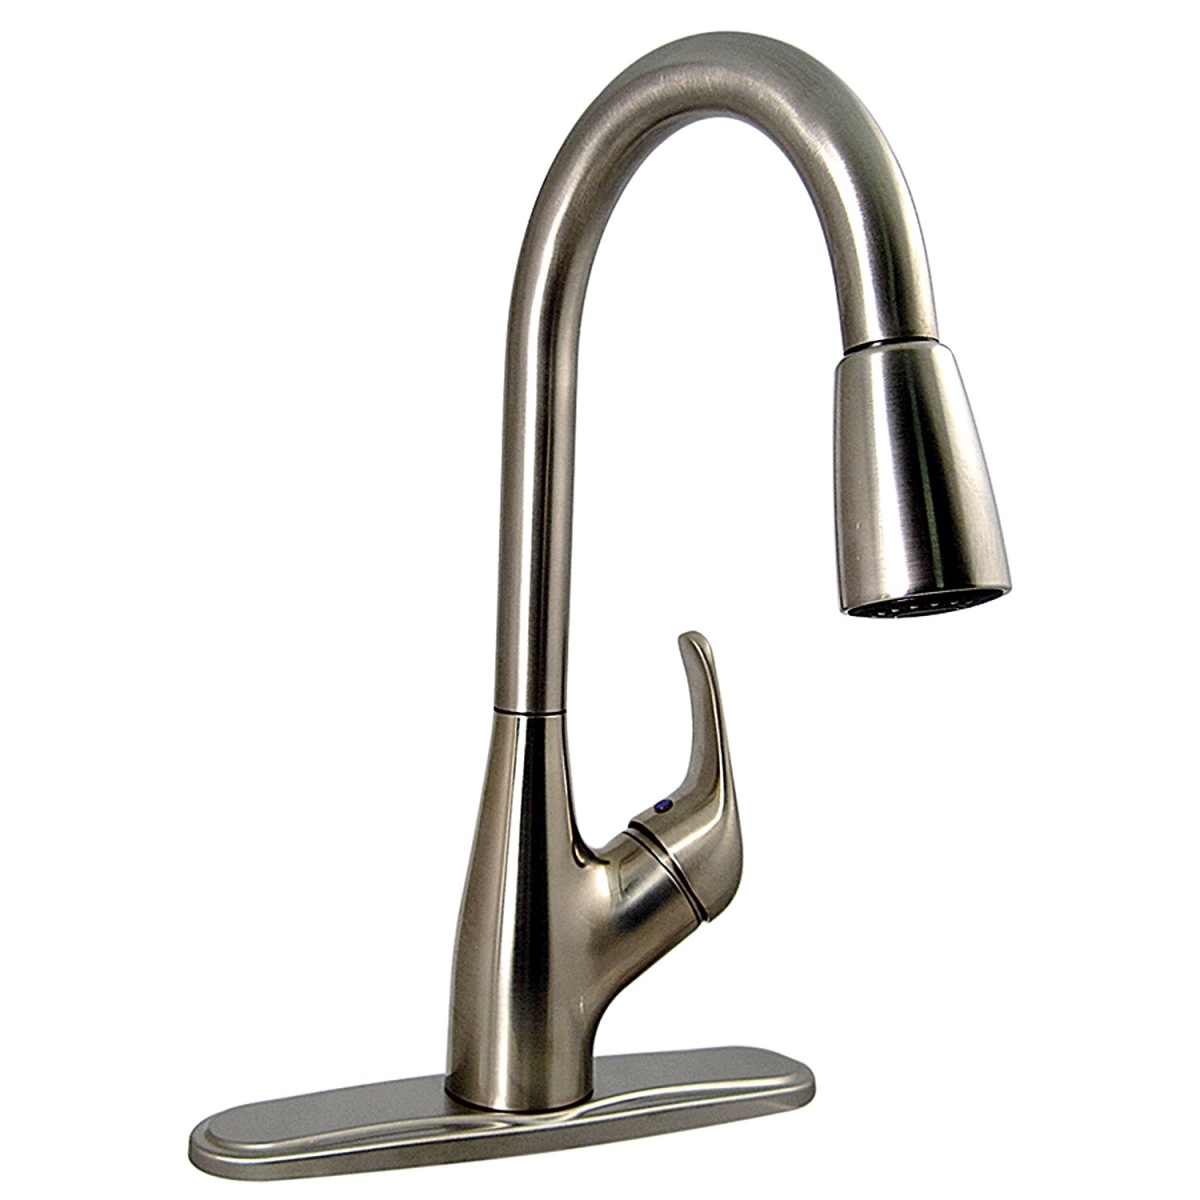 Valterra Pf231461 8 In. Single Handle Pulldown Kitchen Faucet, Nickel